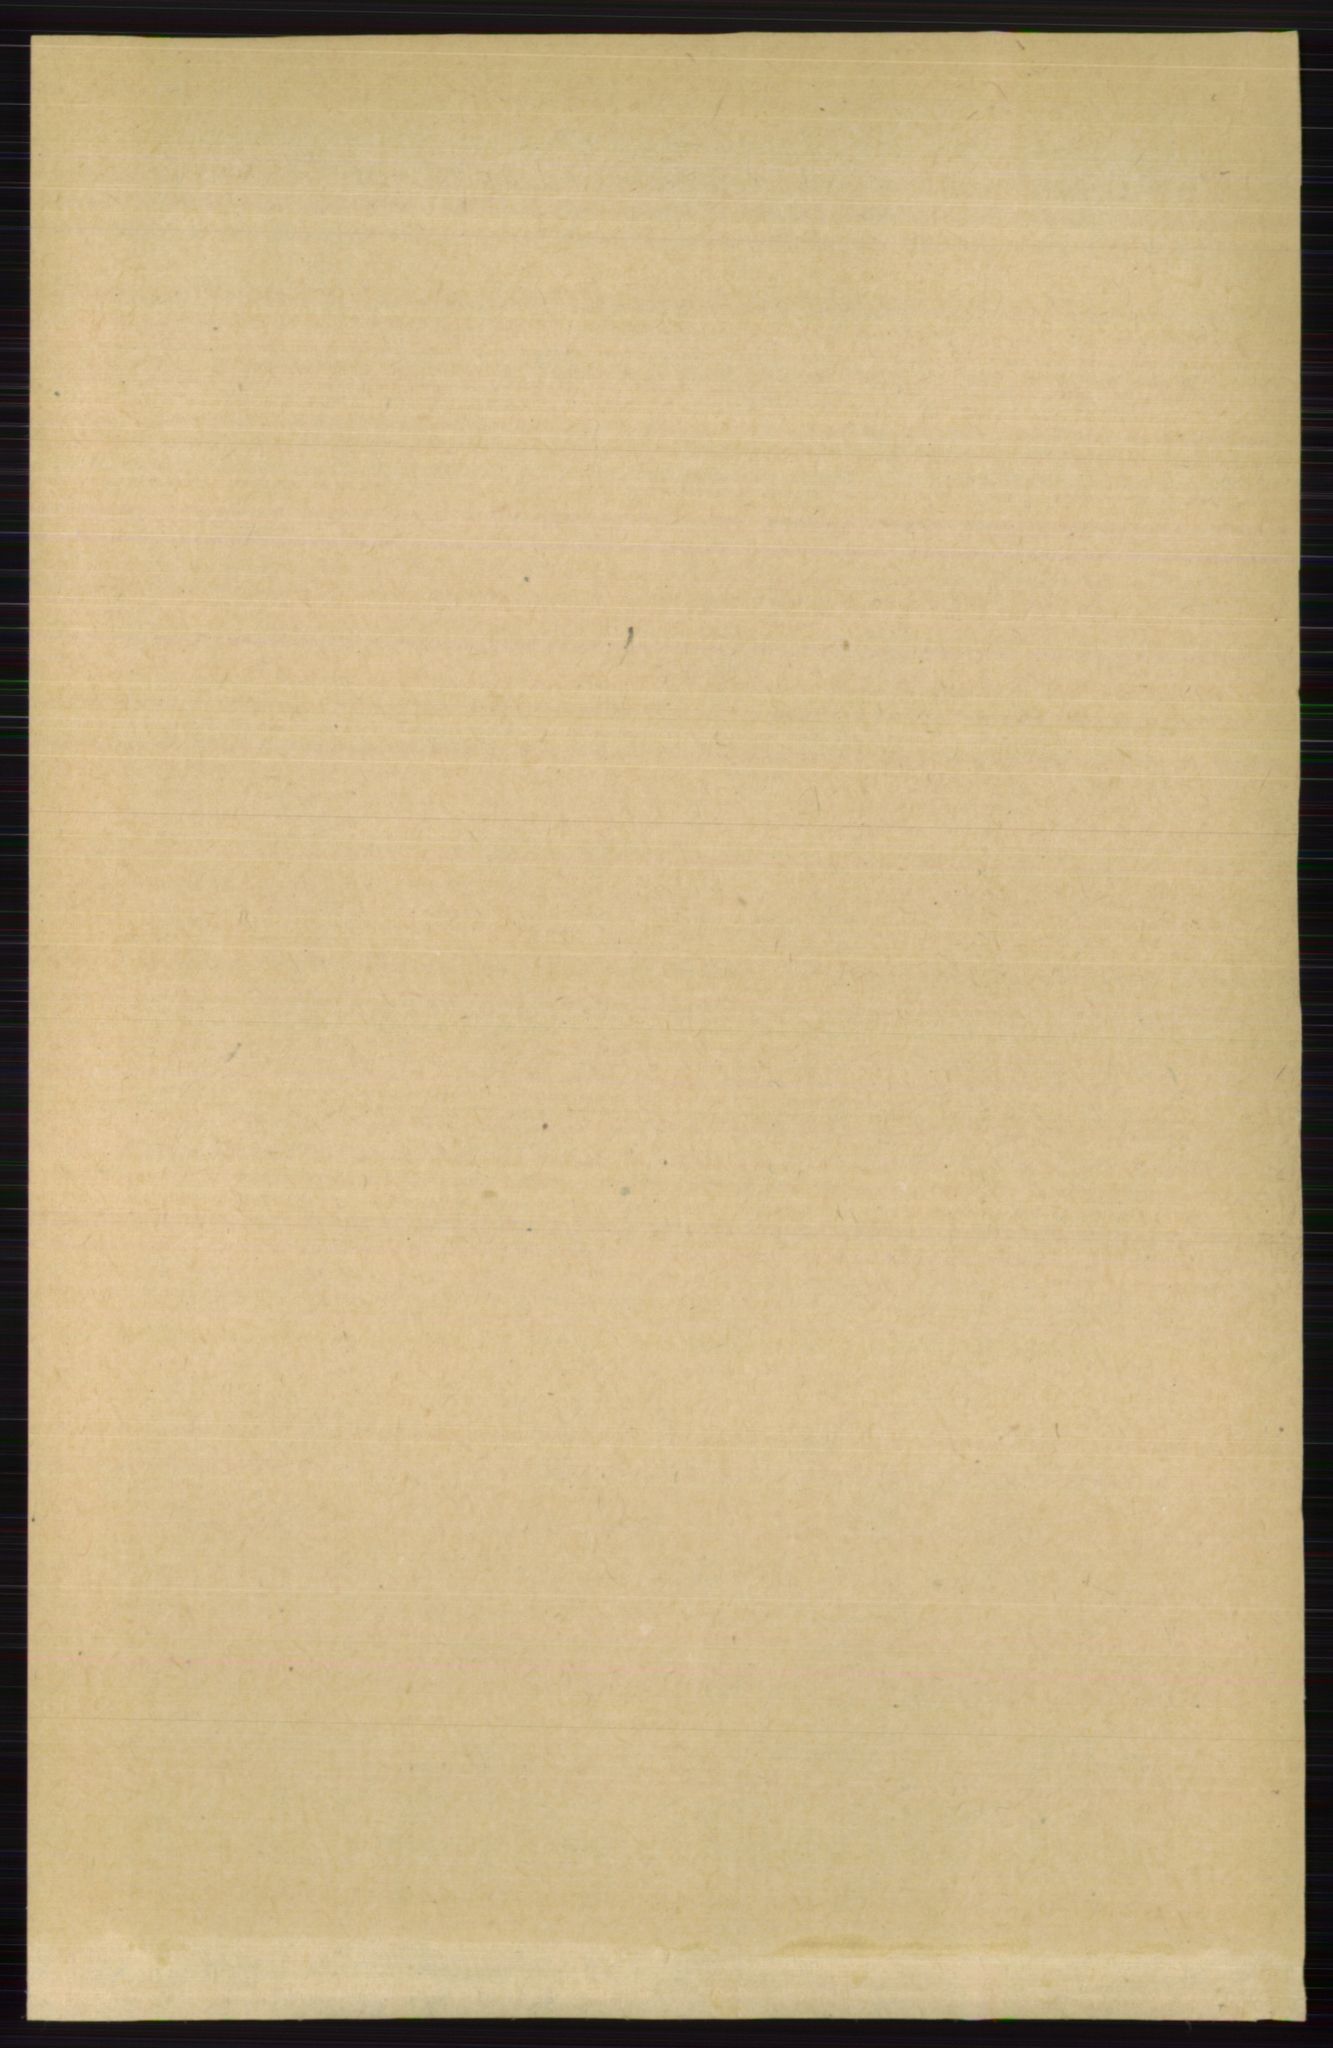 RA, Folketelling 1891 for 0633 Nore herred, 1891, s. 2843